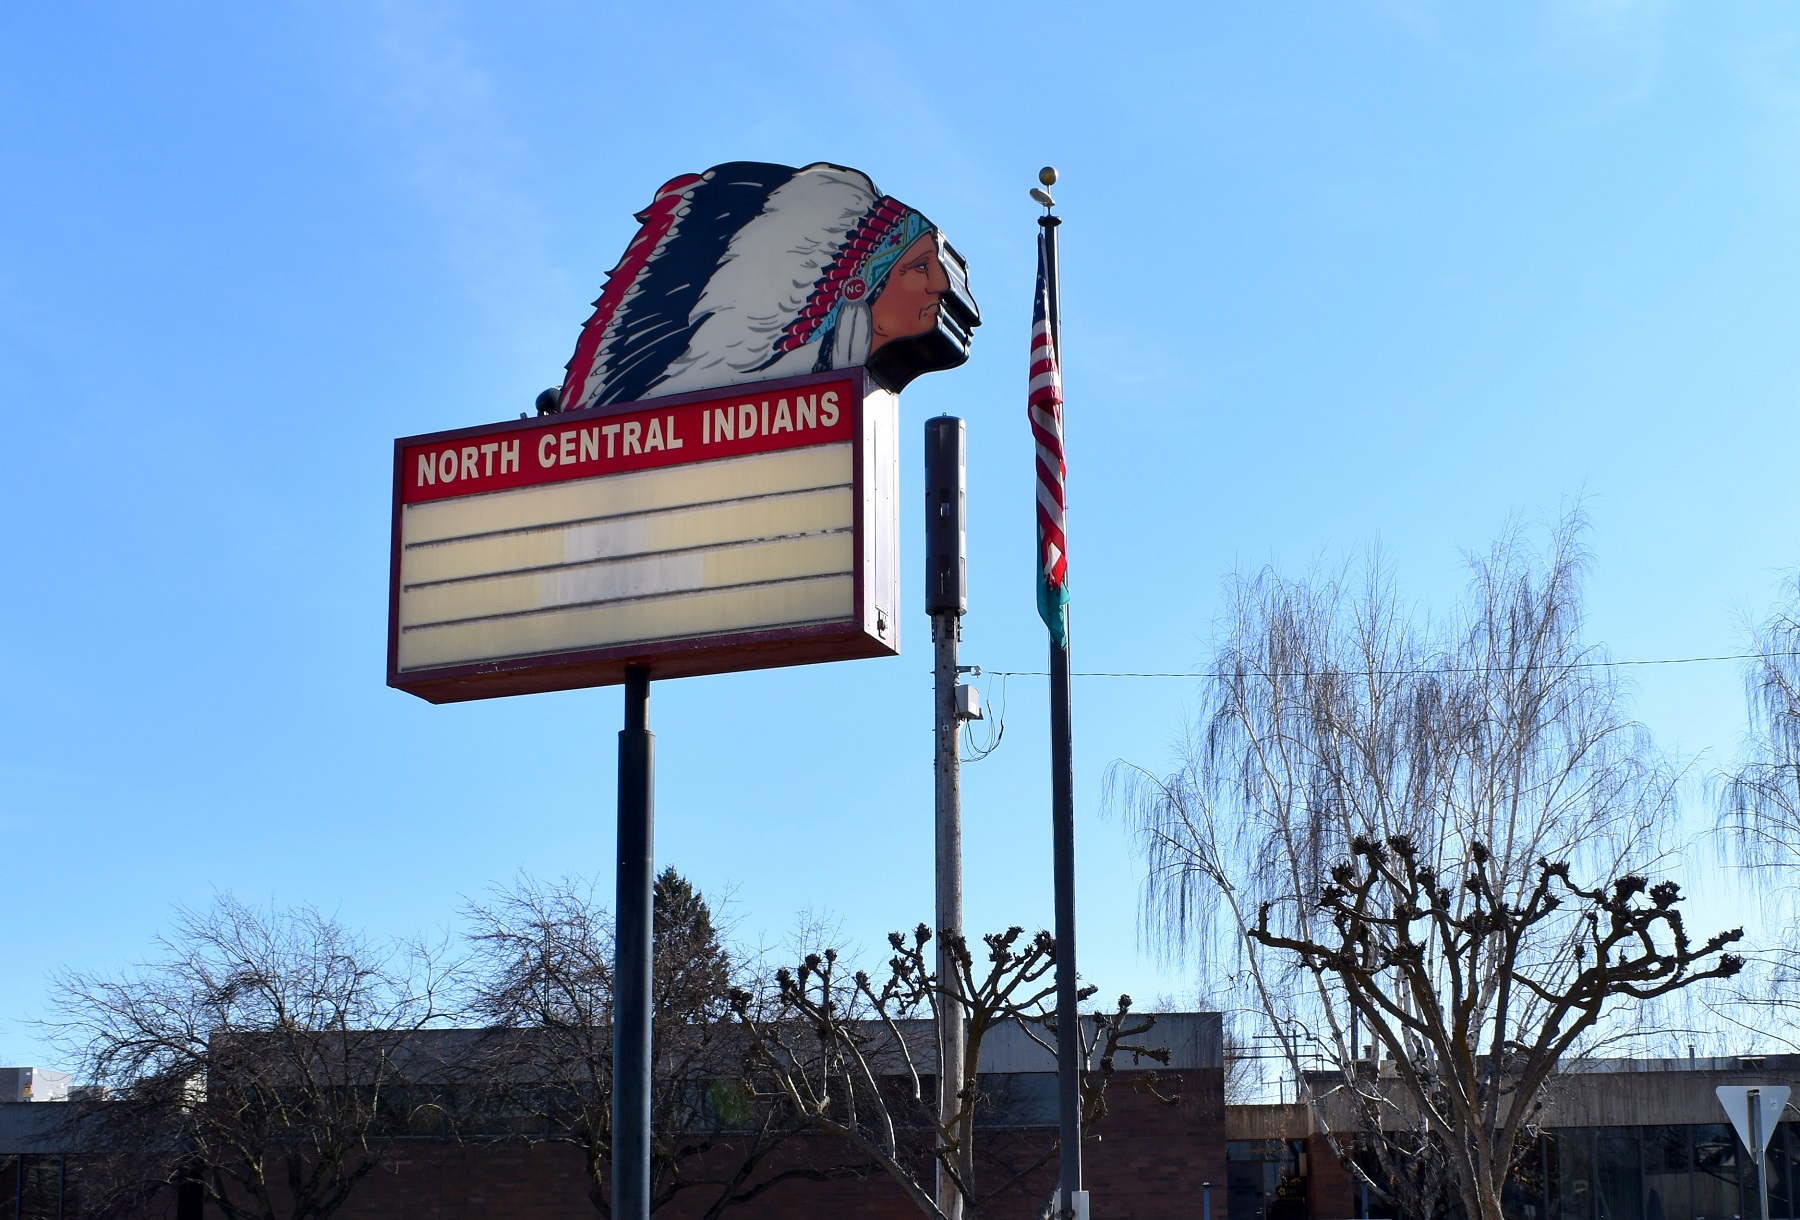 Spokane Indians aim to honor area tribe